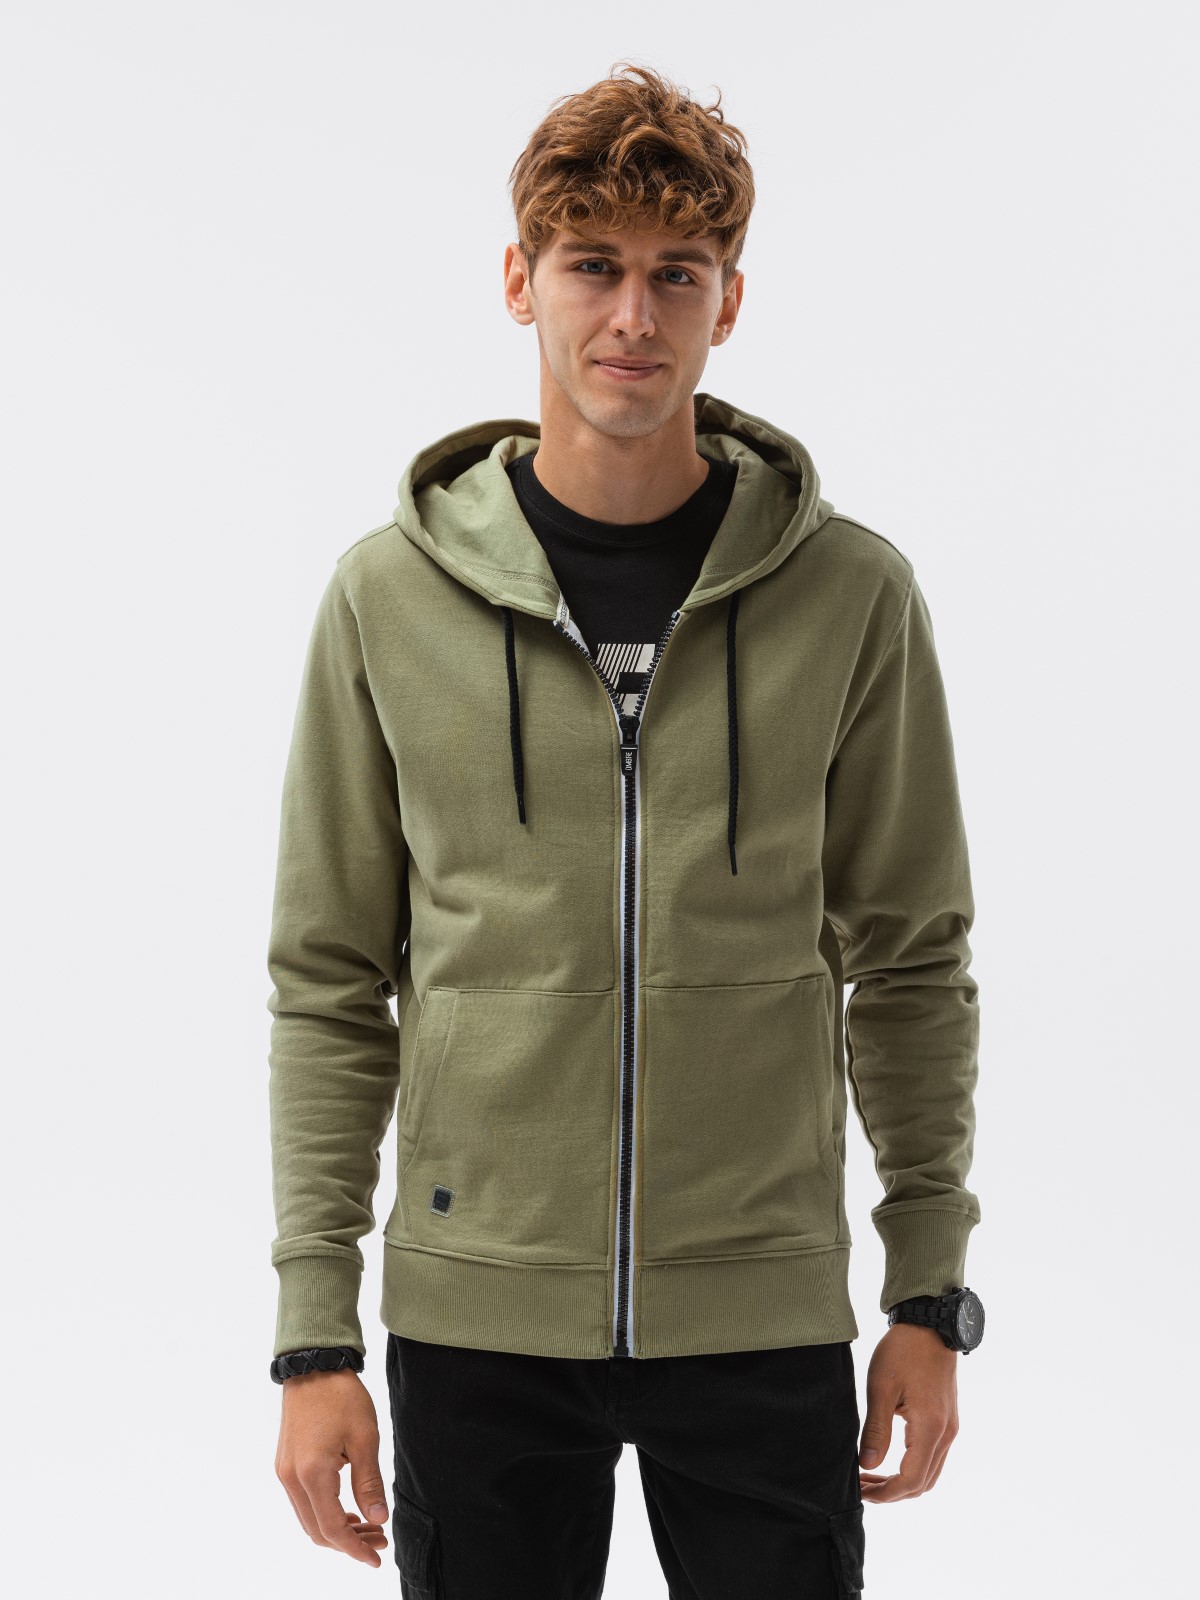 Men's zip-up sweatshirt B1145 - khaki | MODONE wholesale - Clothing For Men